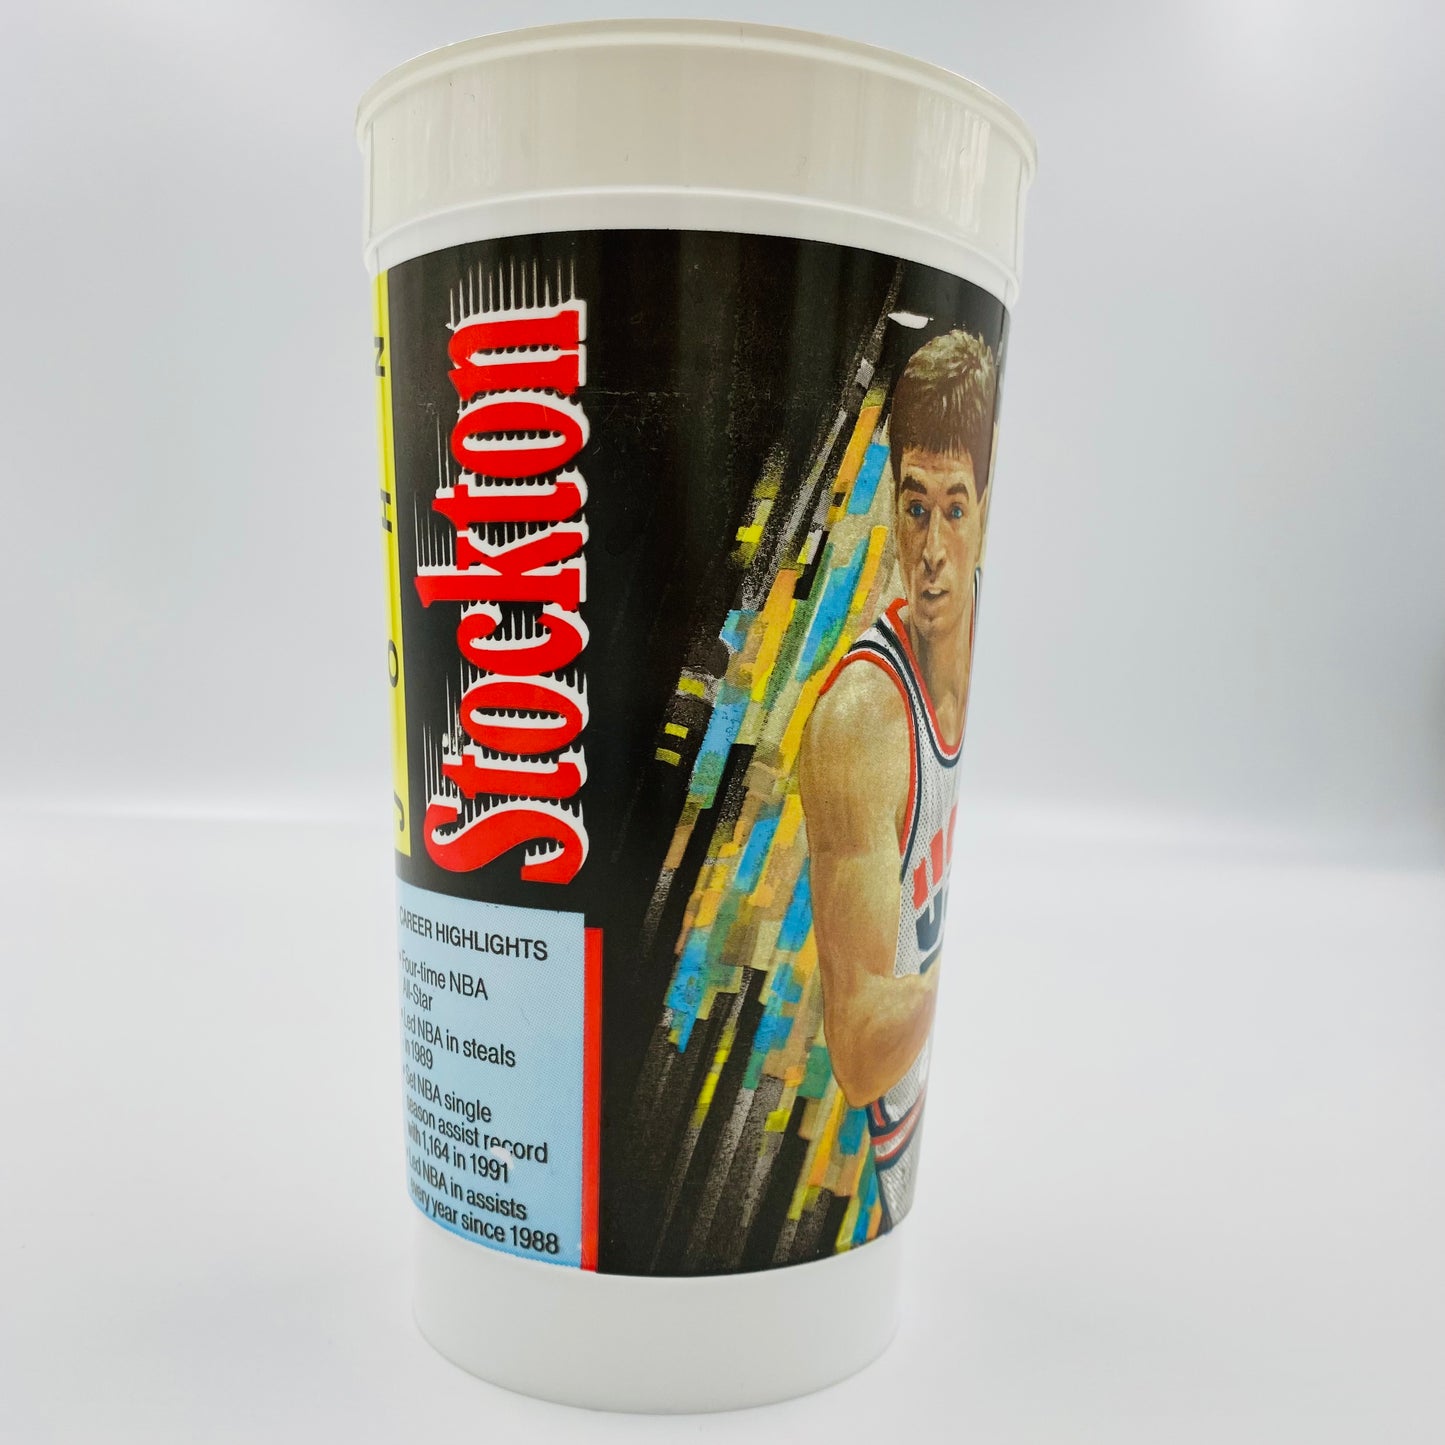 USA Basketball Dream Team John Stockton 32oz plastic cup (1992) McDonald's